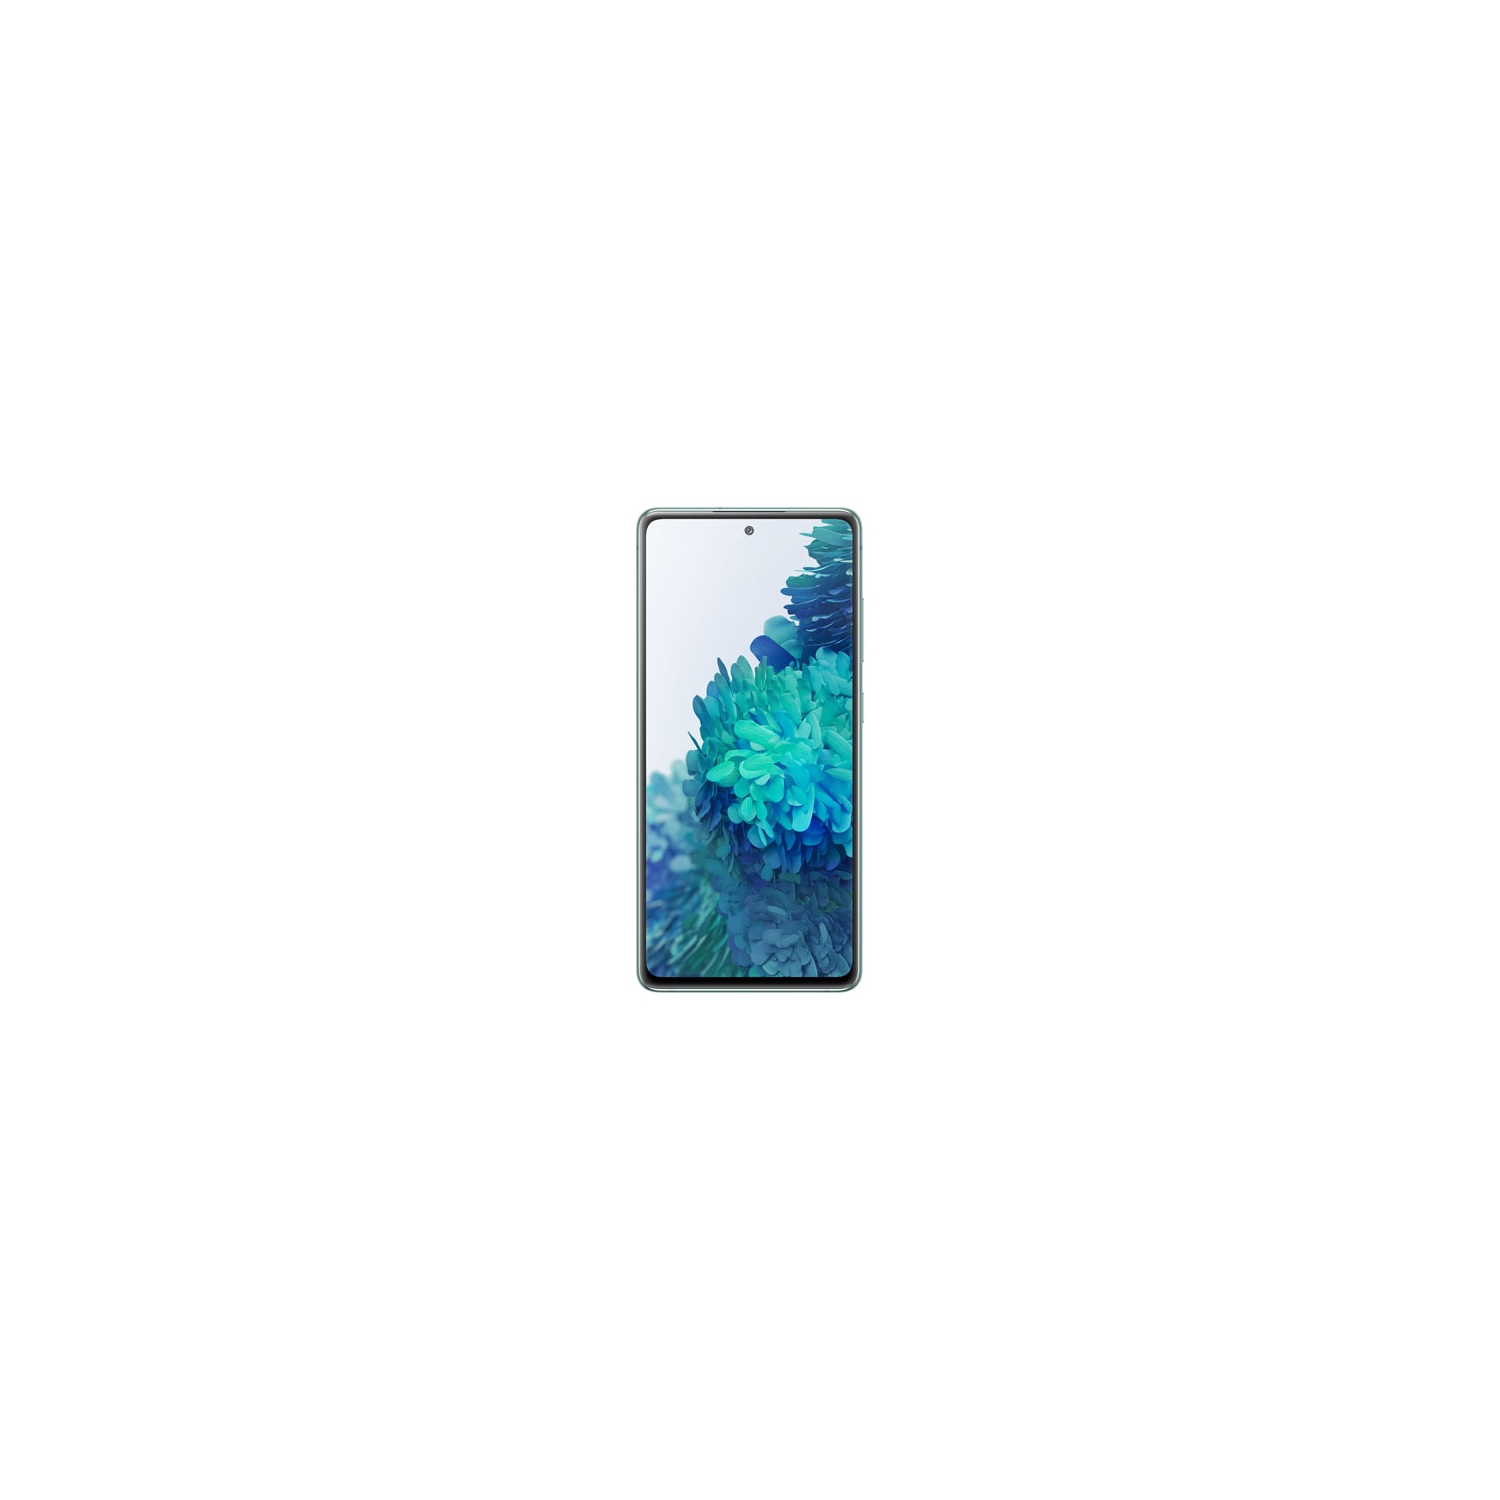 Samsung Galaxy S20 FE 128GB Smartphone - Cloud Mint - Unlocked - Open Box